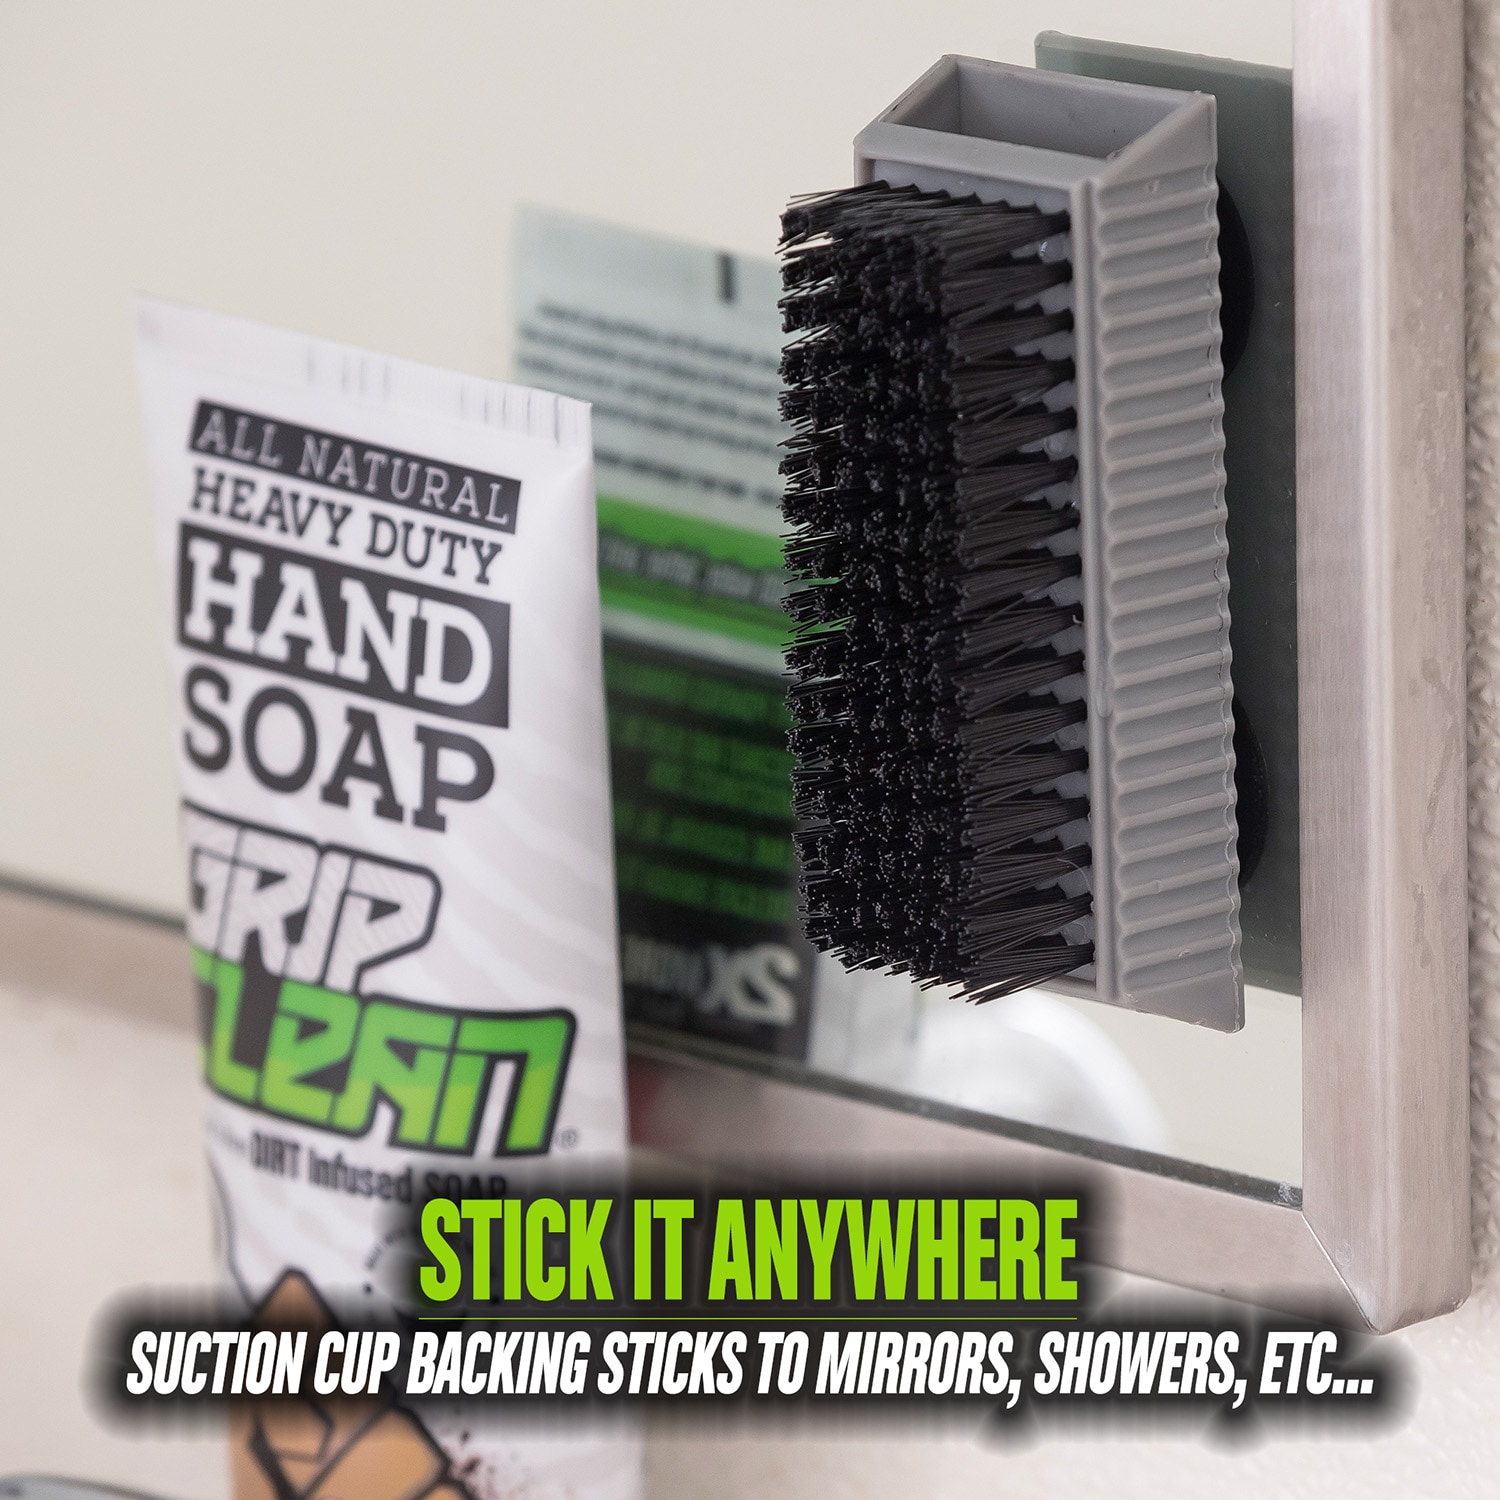 Grip Clean Grip 8-oz Citrus Foaming Hand Soap at